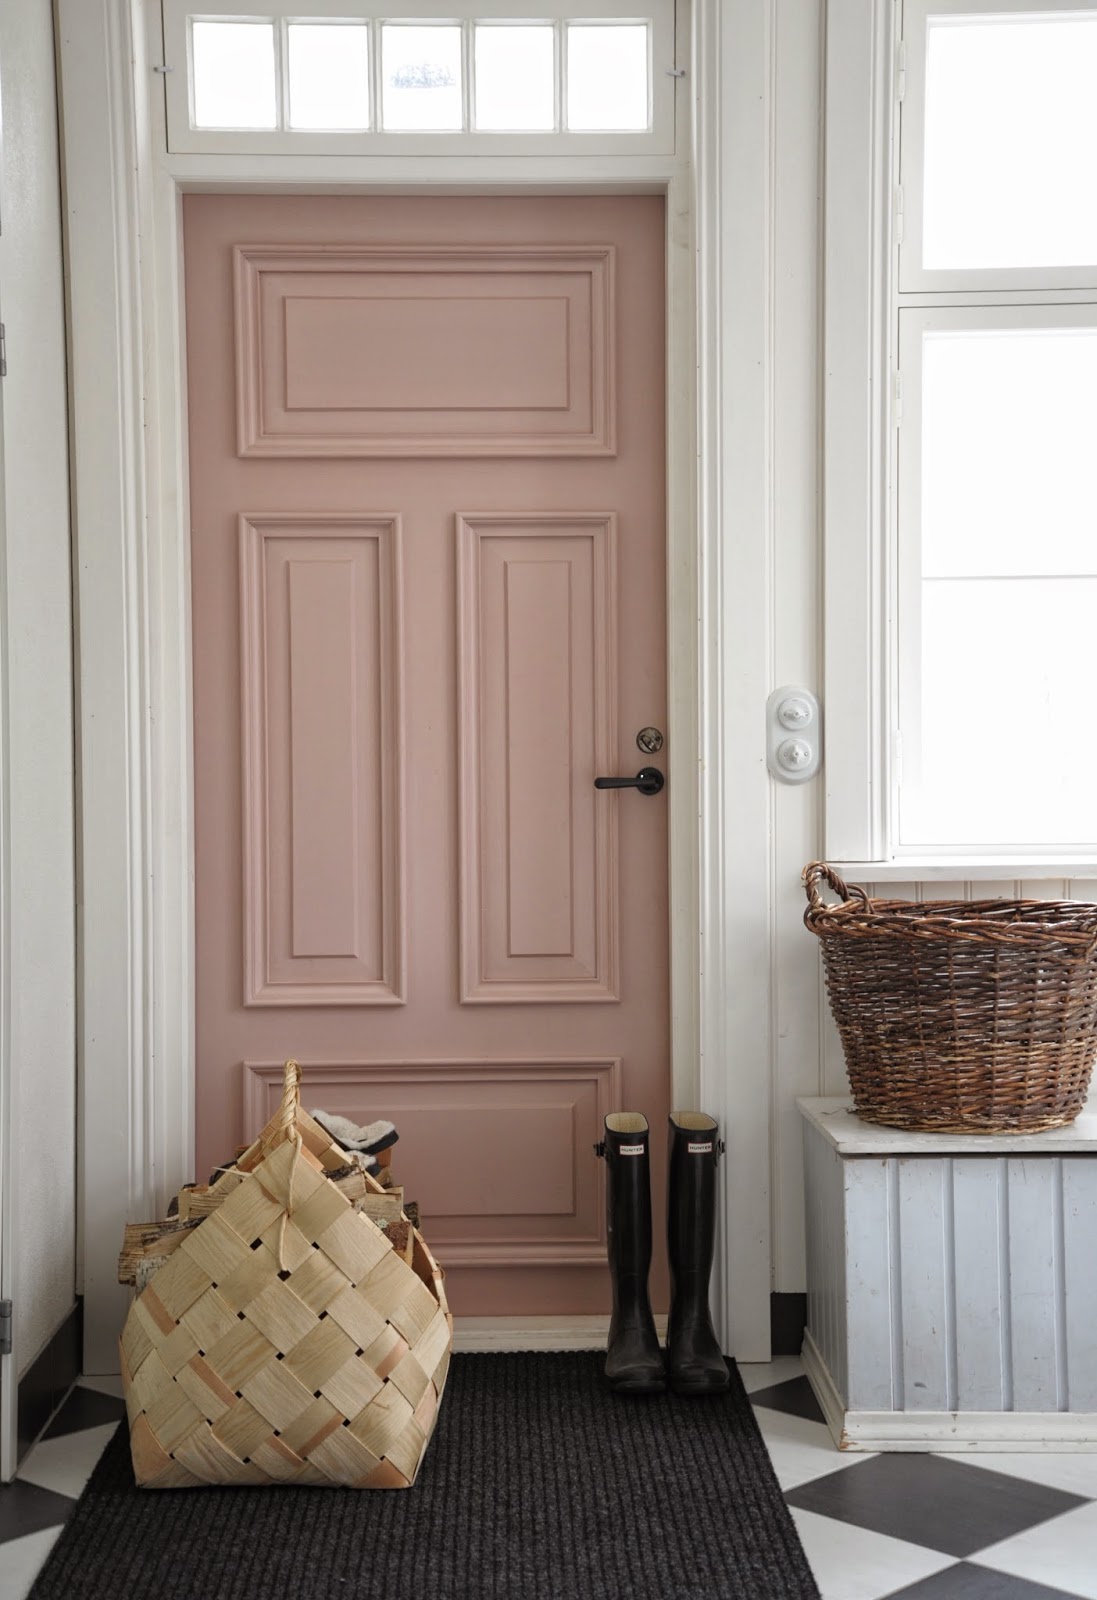 Una puerta pintada de color rosa pálido